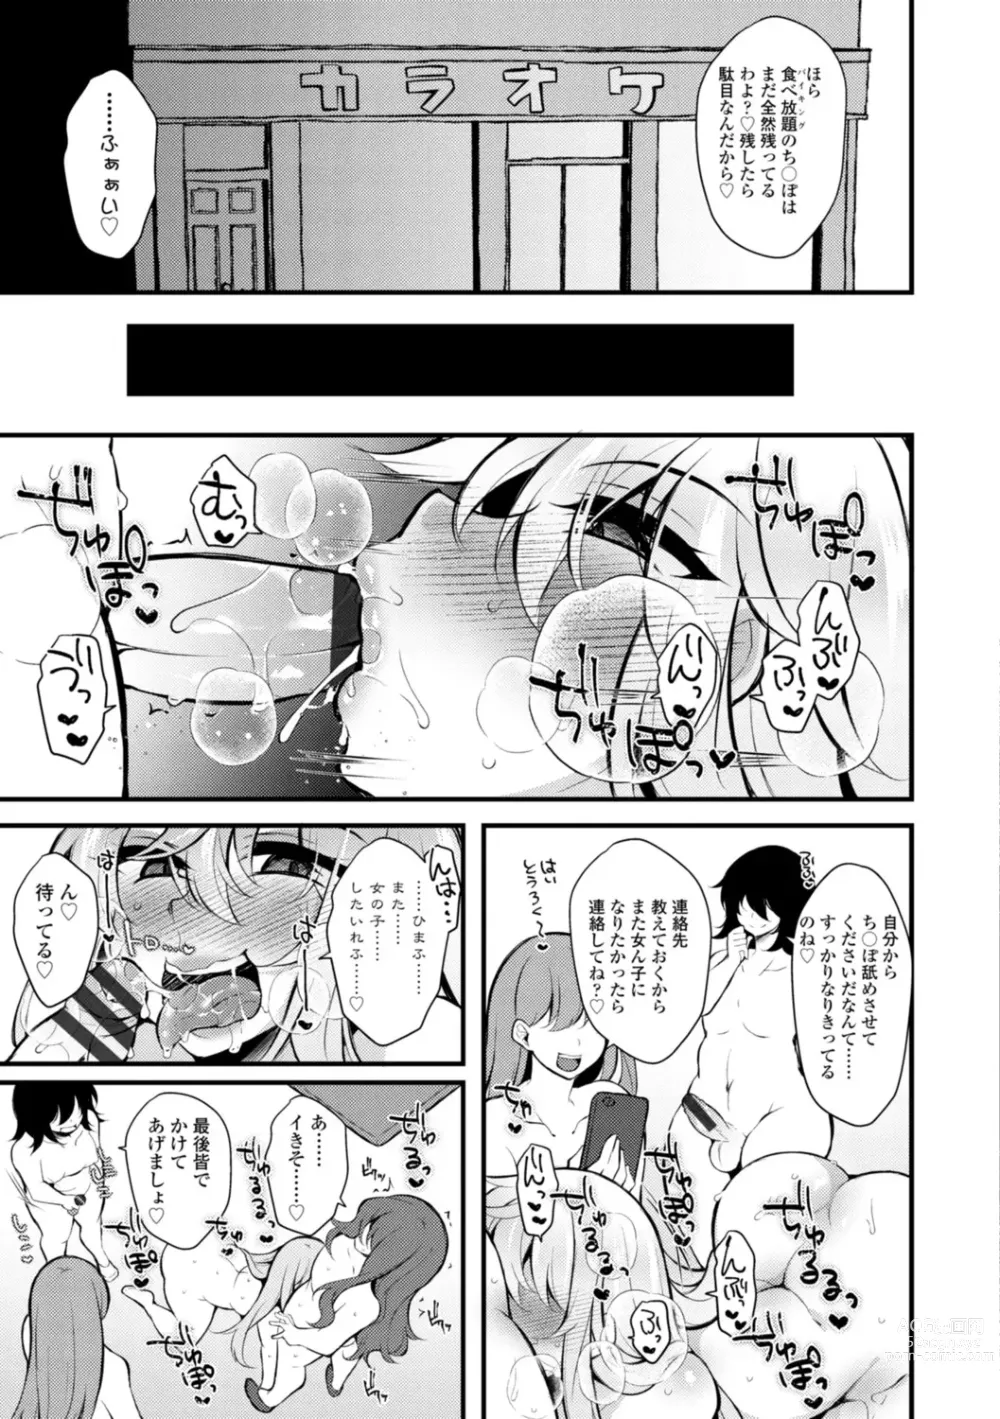 Page 187 of manga Onnanoko-sama no Iu Toori